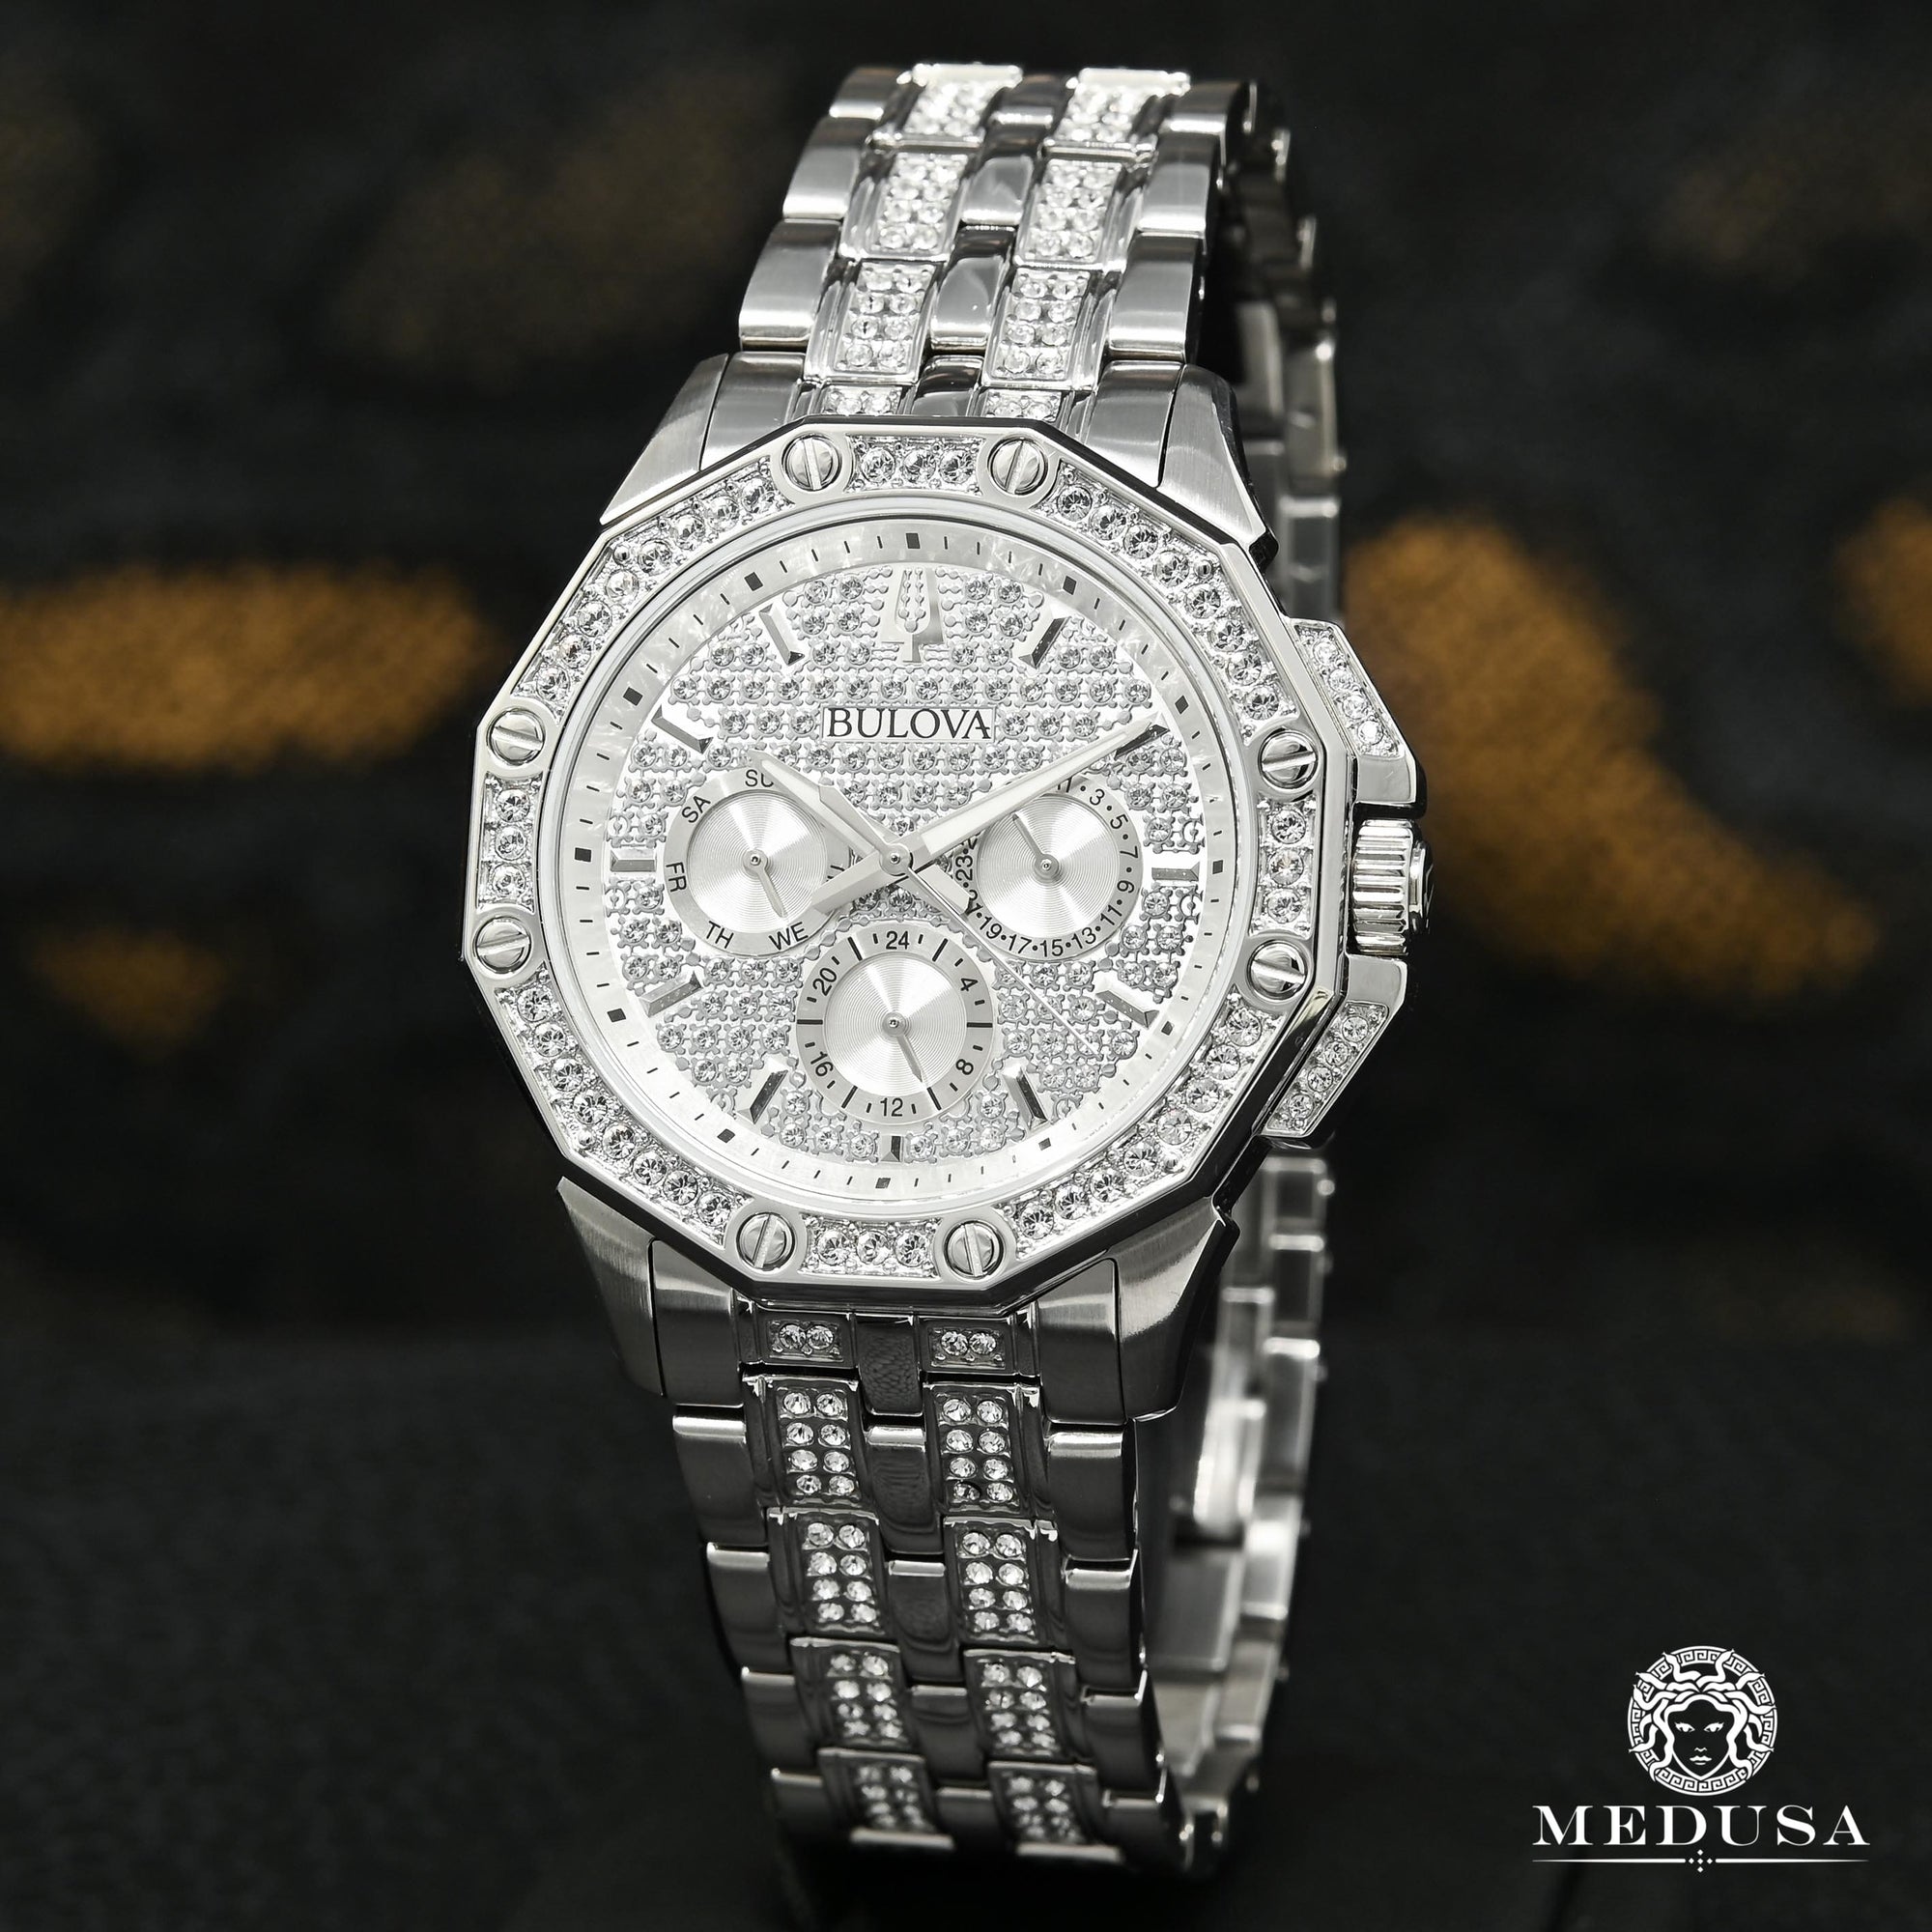 Bulova Watch | Bulova Cristal - 96C134 Men's Watch | Medusa jewelry ...